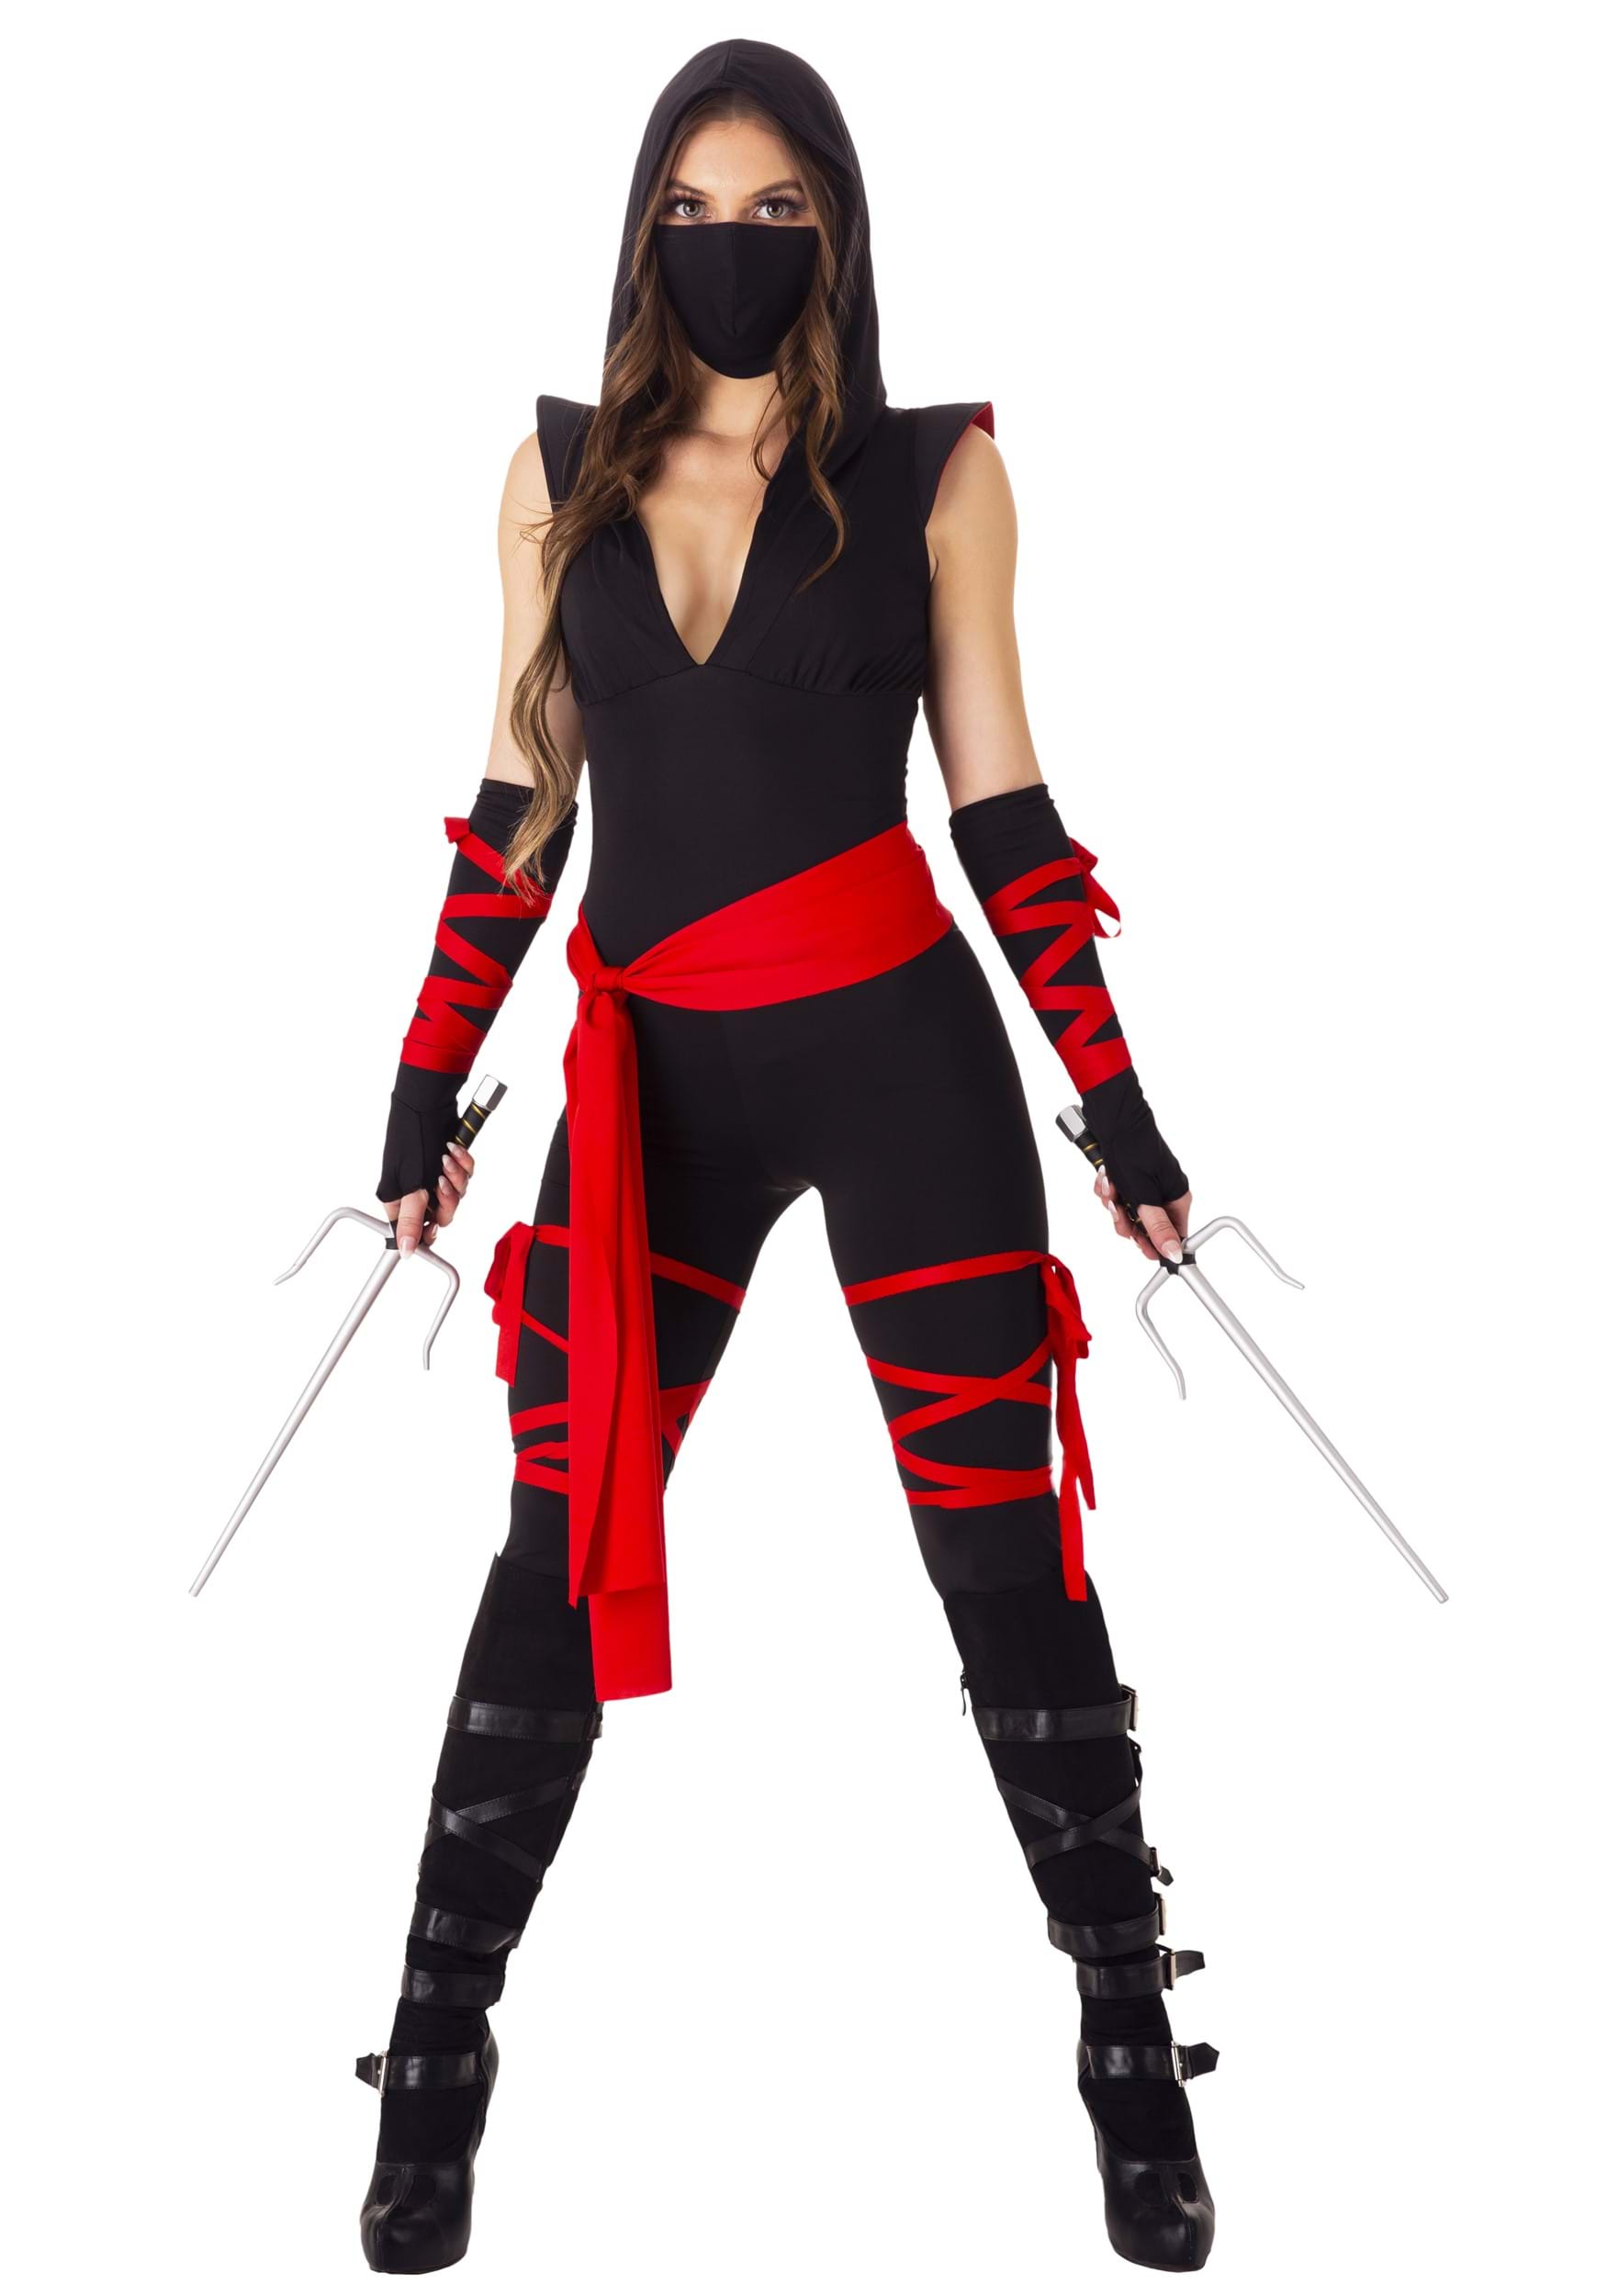 Deadly Ninja Costume